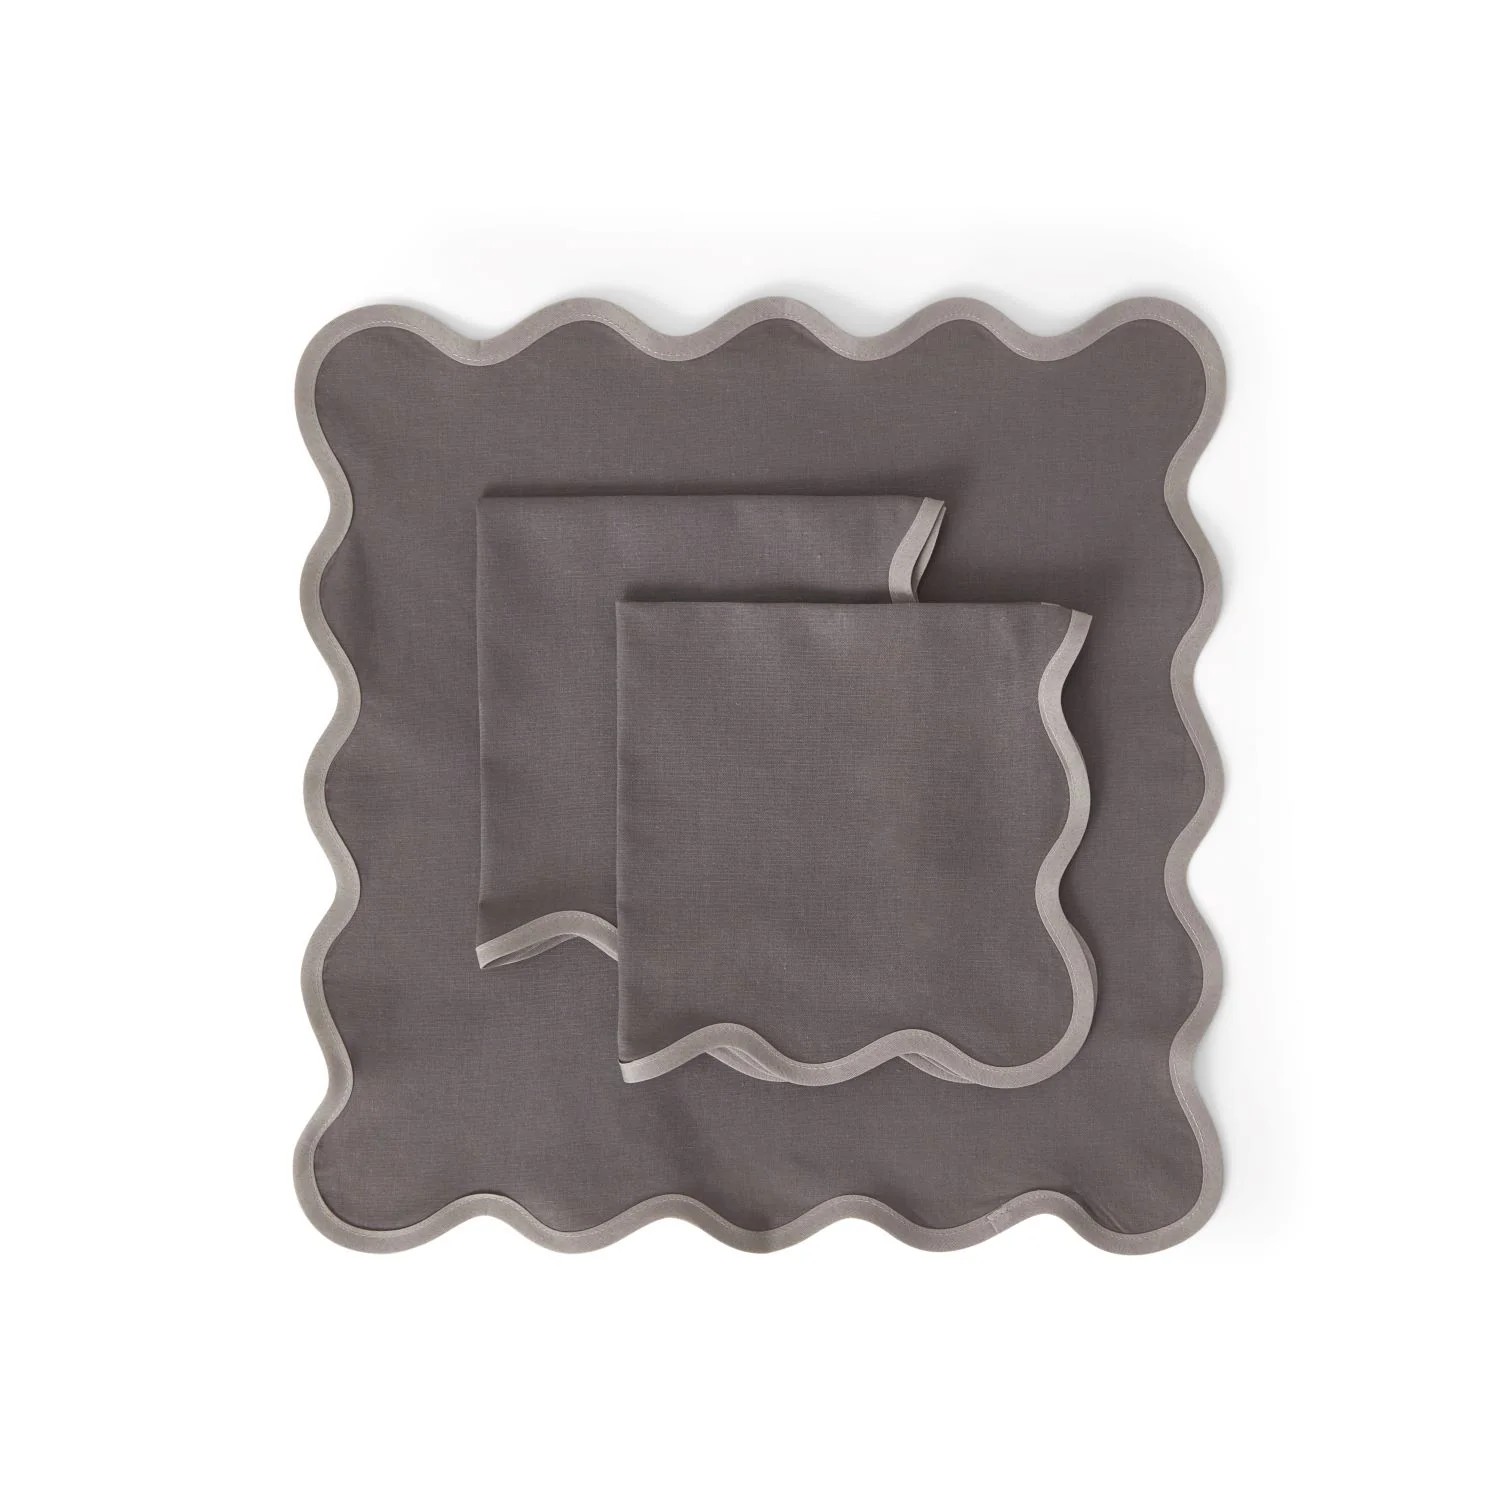 Scallop Napkin Milano Sophisticated Grey